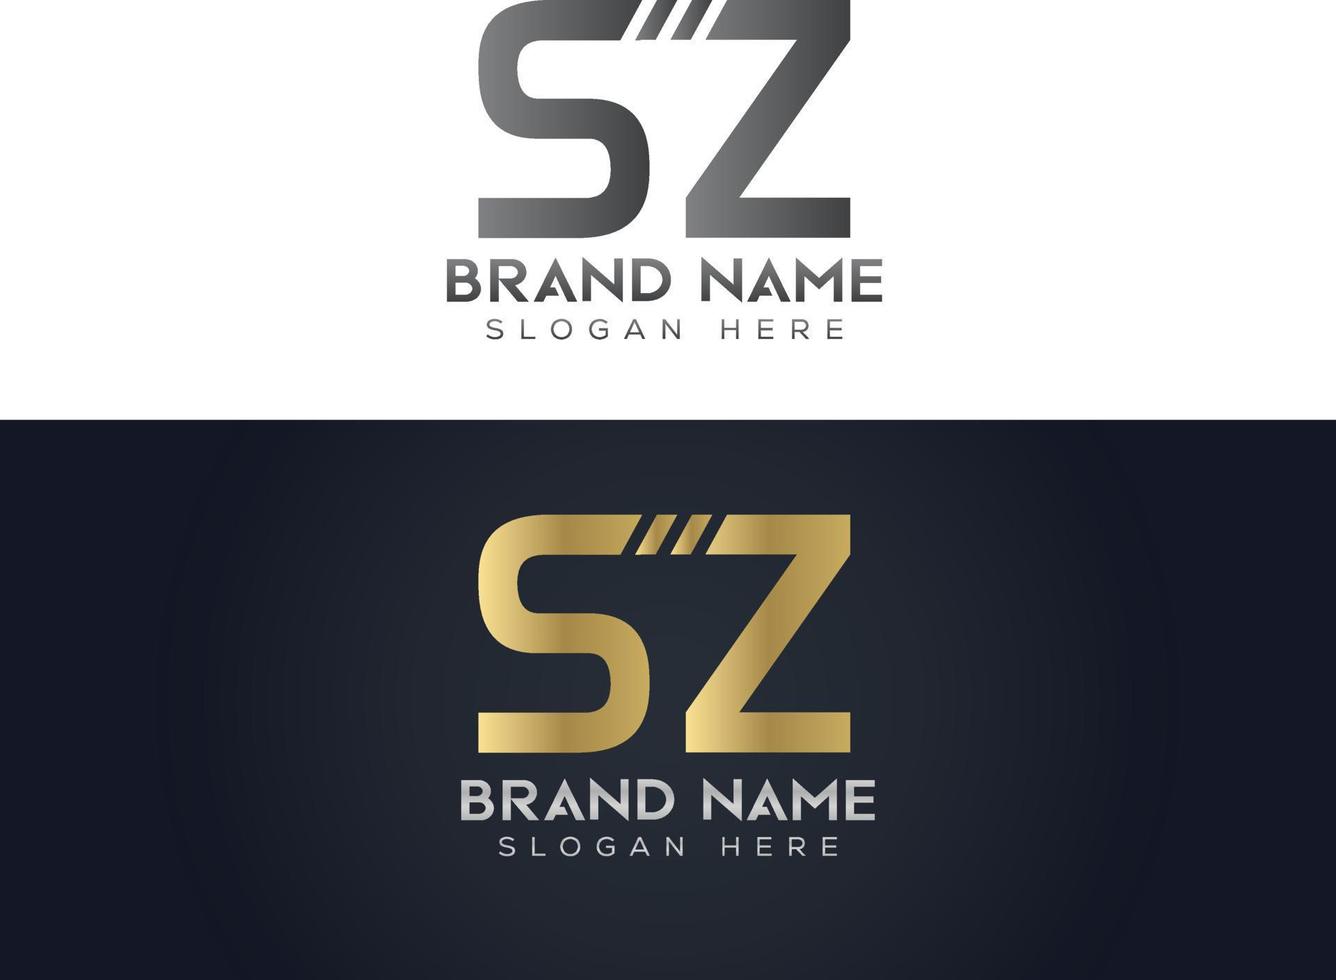 Letter S Z typography vector logo design